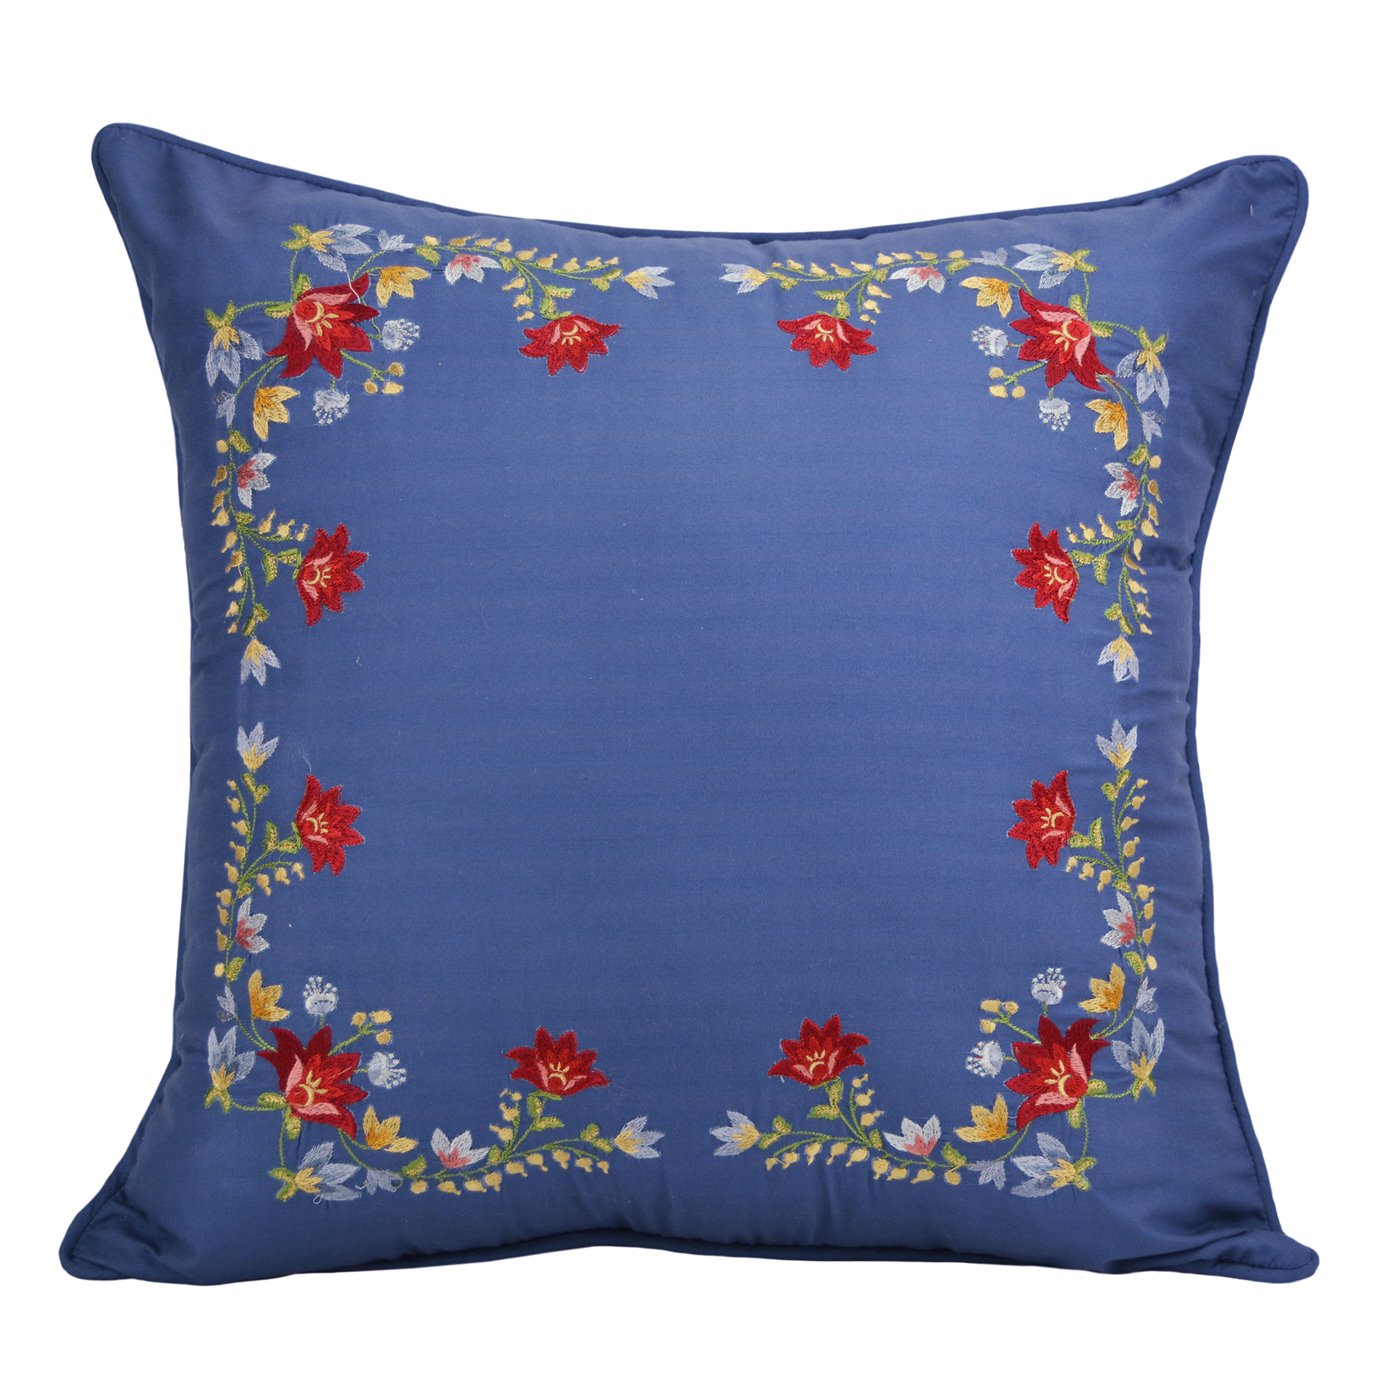 Chesapeake "Floral" Decorative Pillow